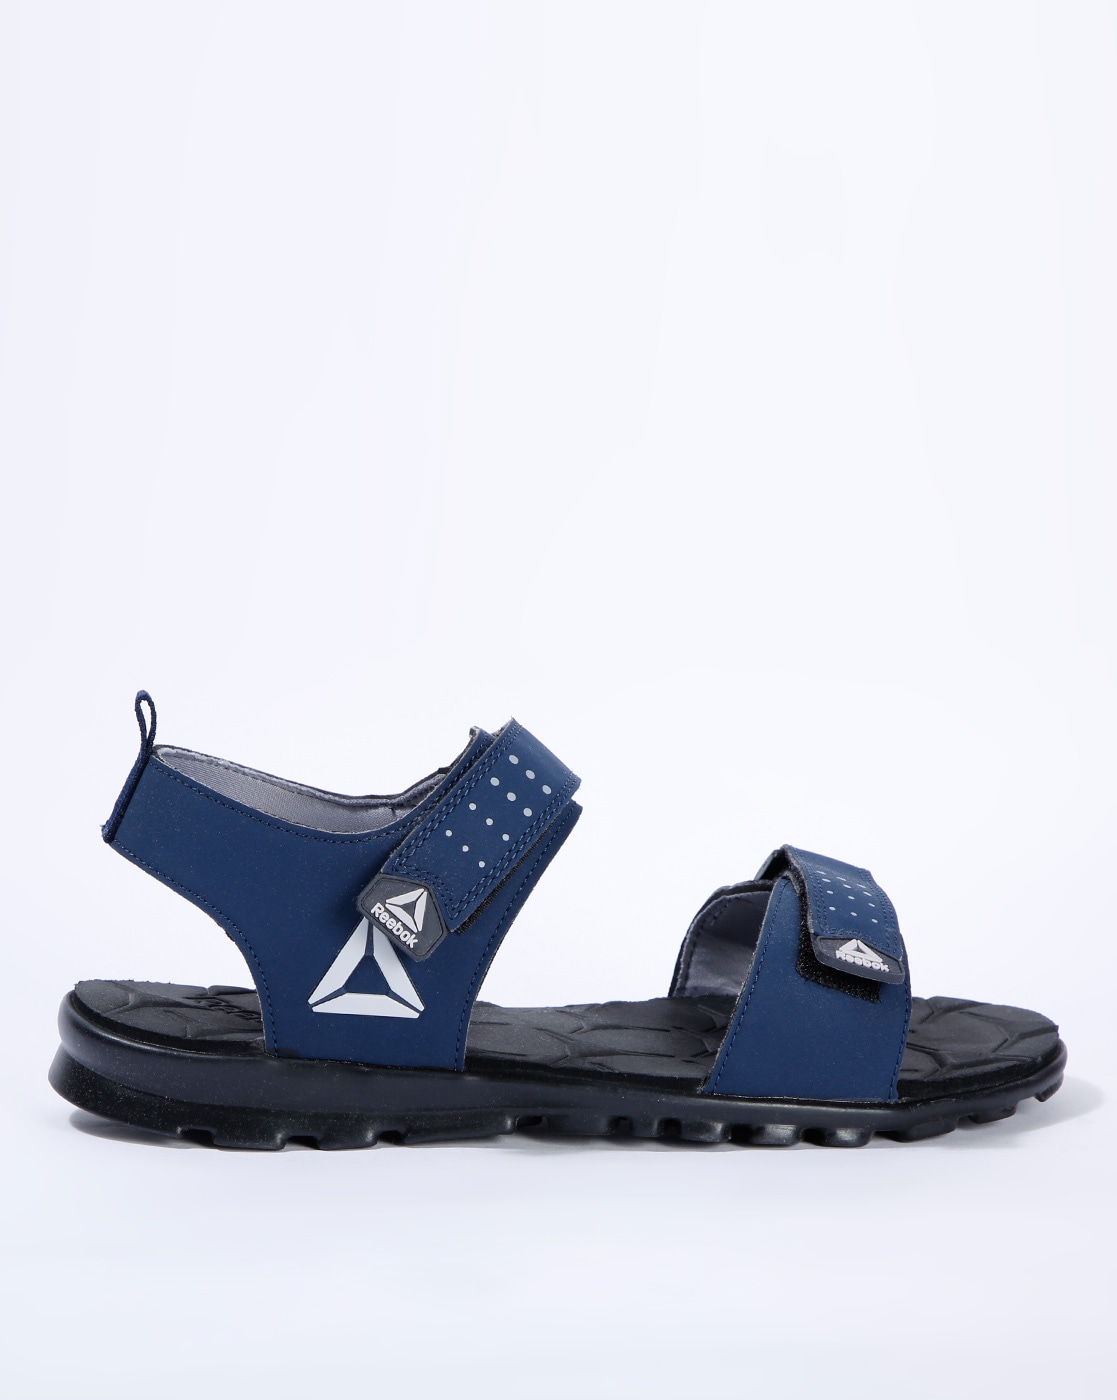 Buy Blue Sports Sandals for Men Online | Ajio.com